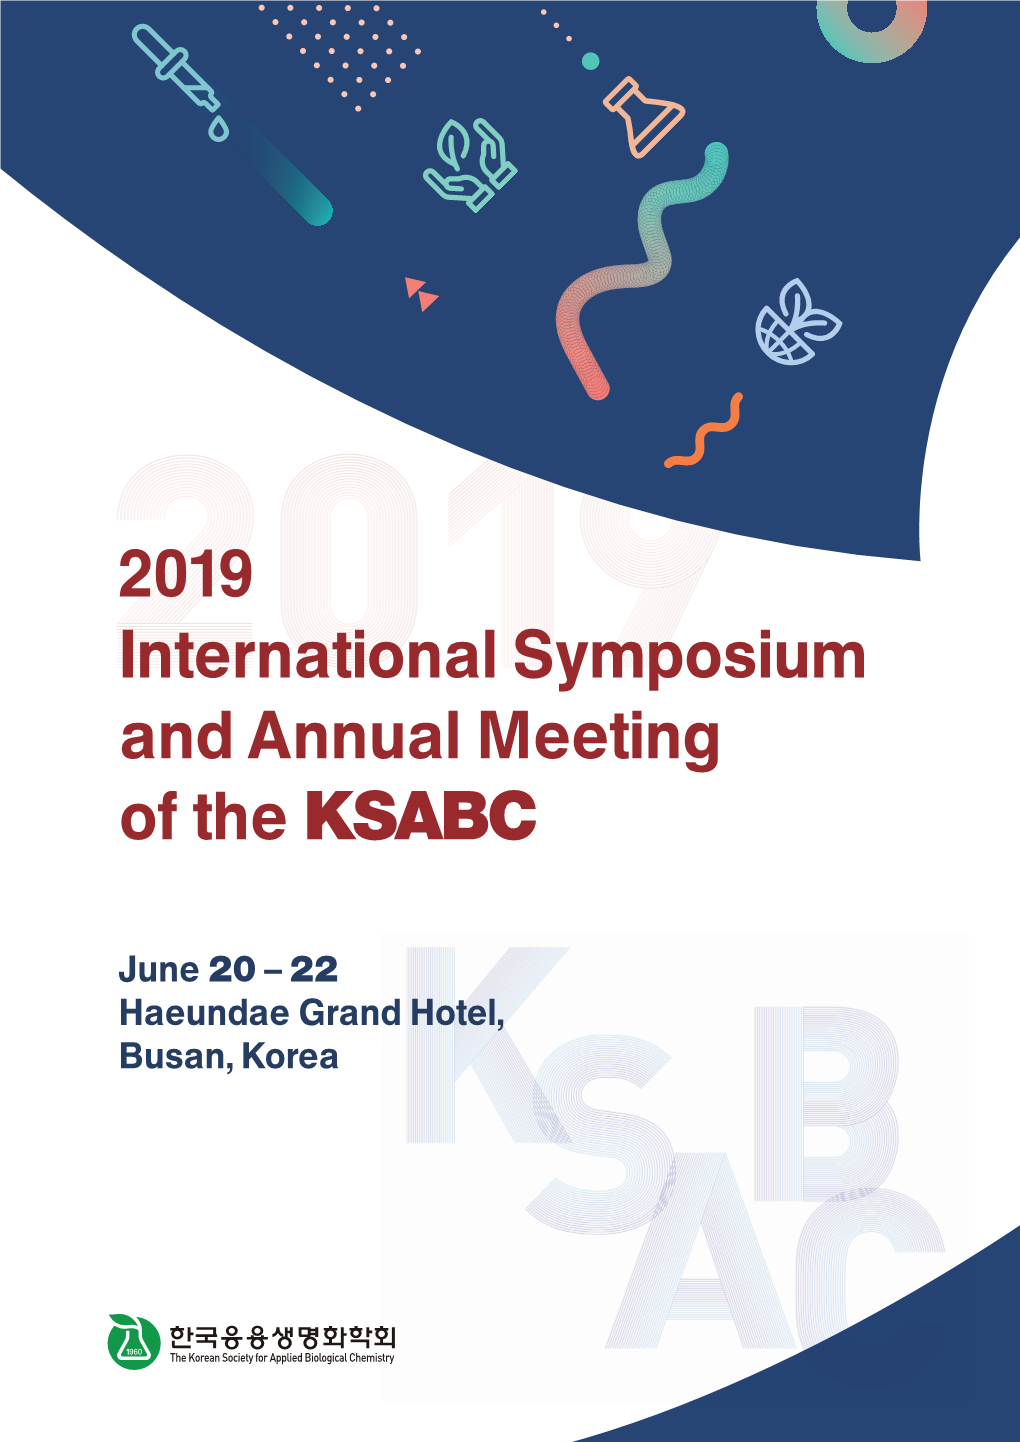 Haeundae Grand Hotel, Busan, Korea 2019 International Symposium and Annual Meeting of the KSABC